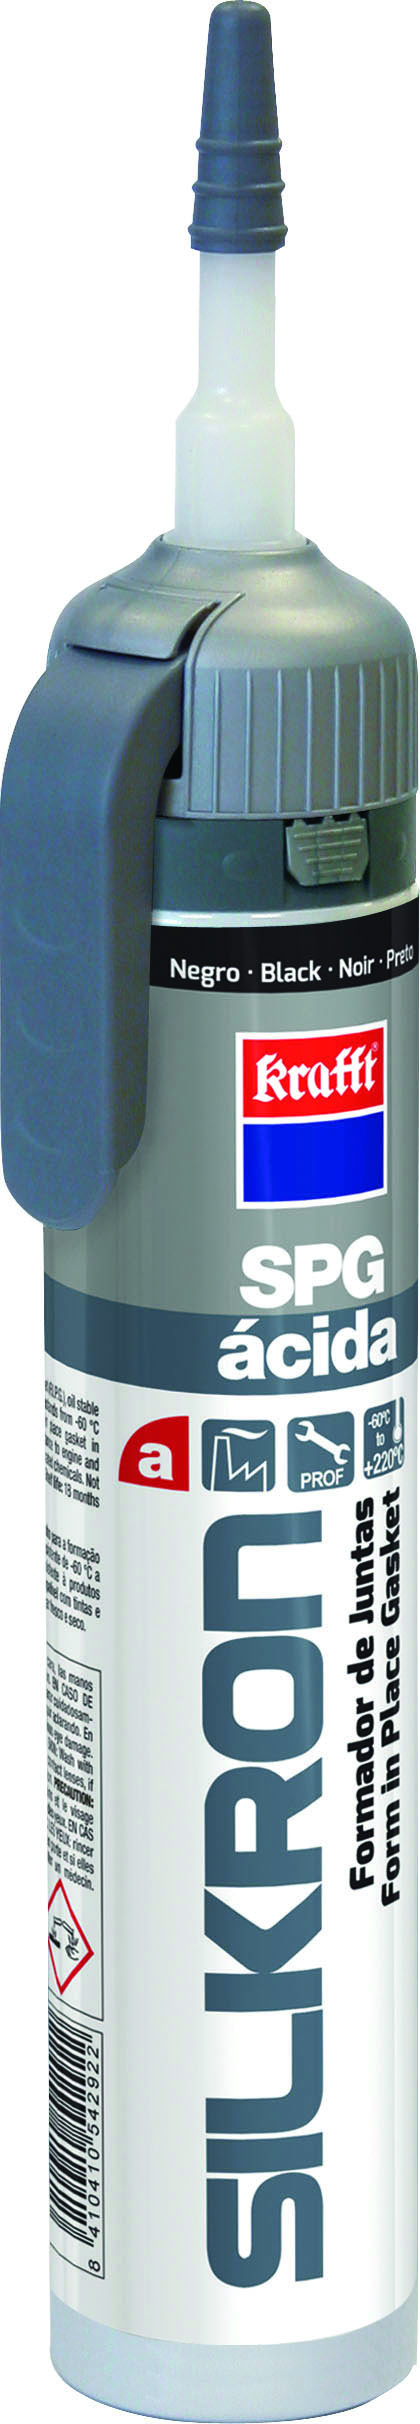 Silkron SPG Plus - Krafft